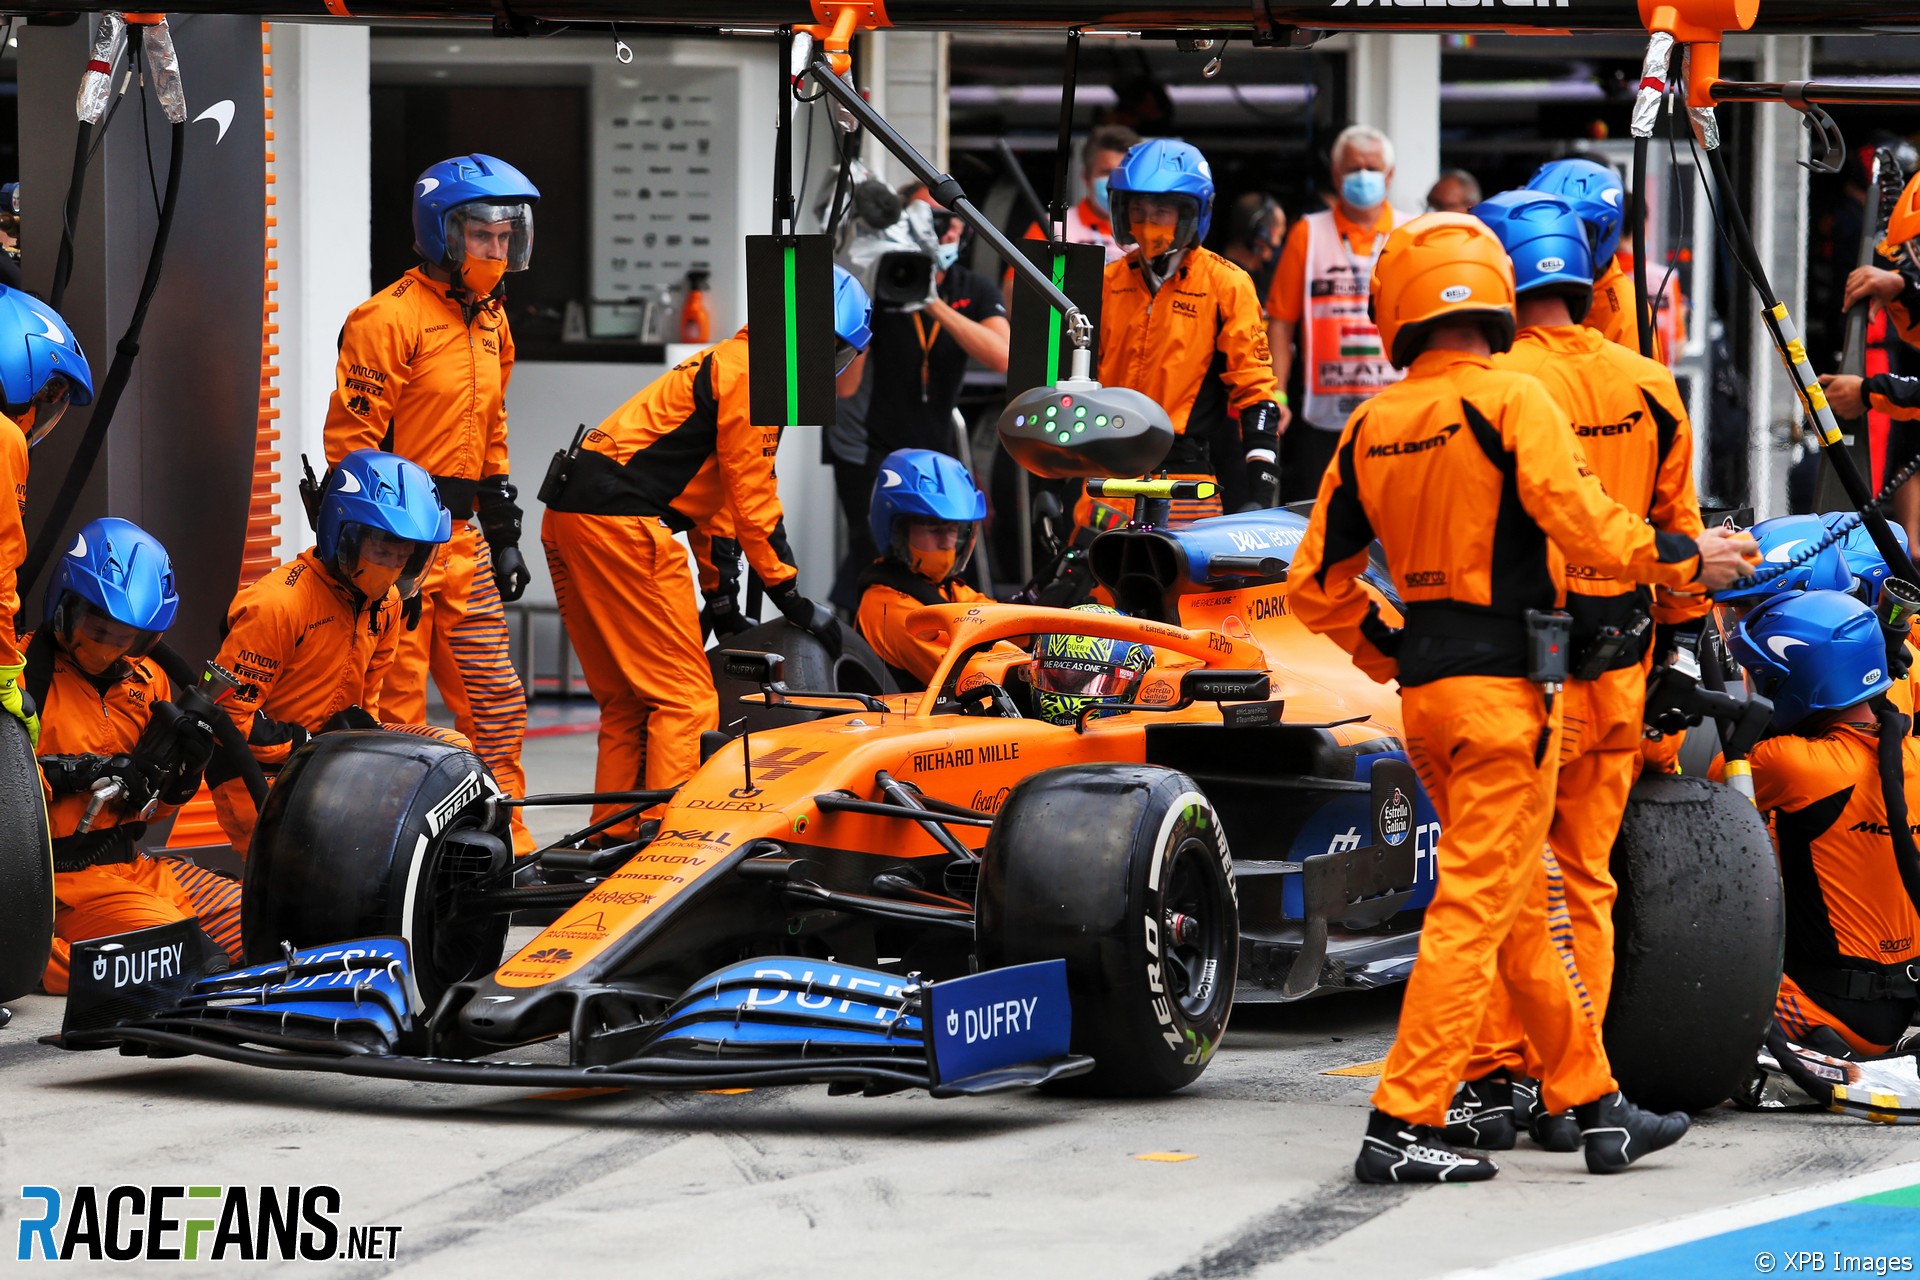 Lando Norris, McLaren, Hungaroring, 2020